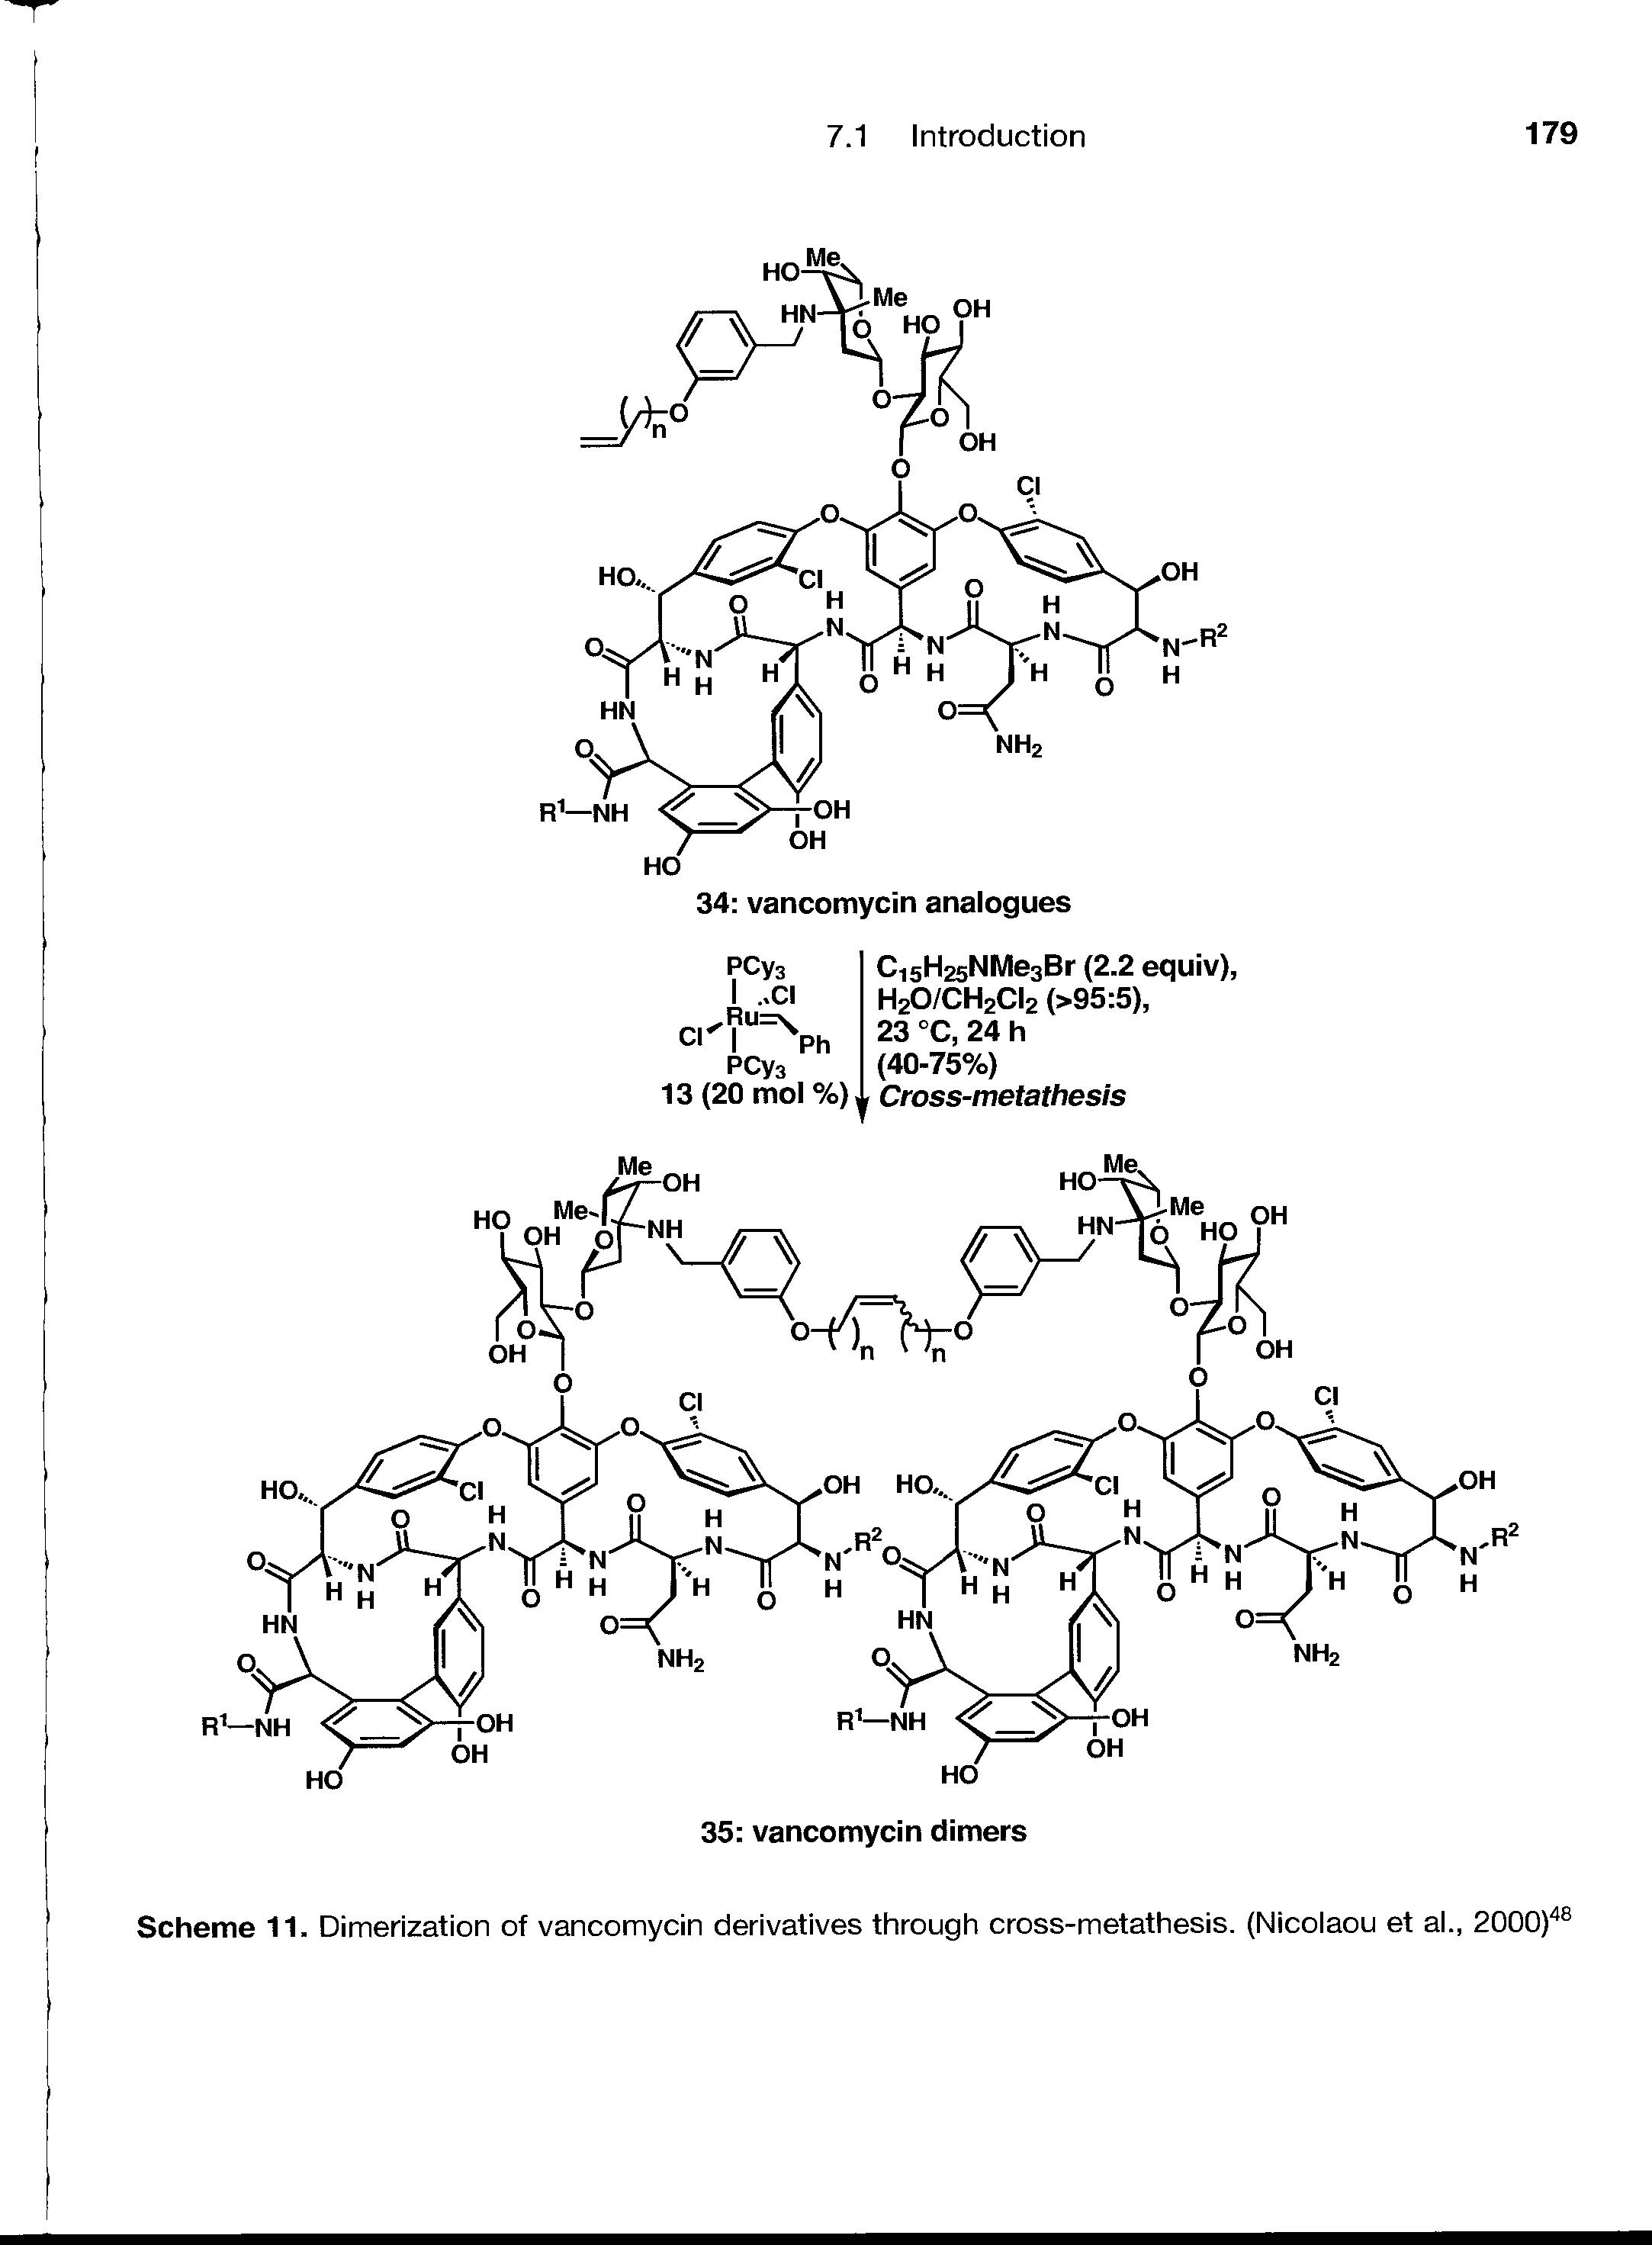 Scheme 11. Dimerization of vancomycin derivatives through cross-metathesis. (Nicolaou et al., 2000) ...